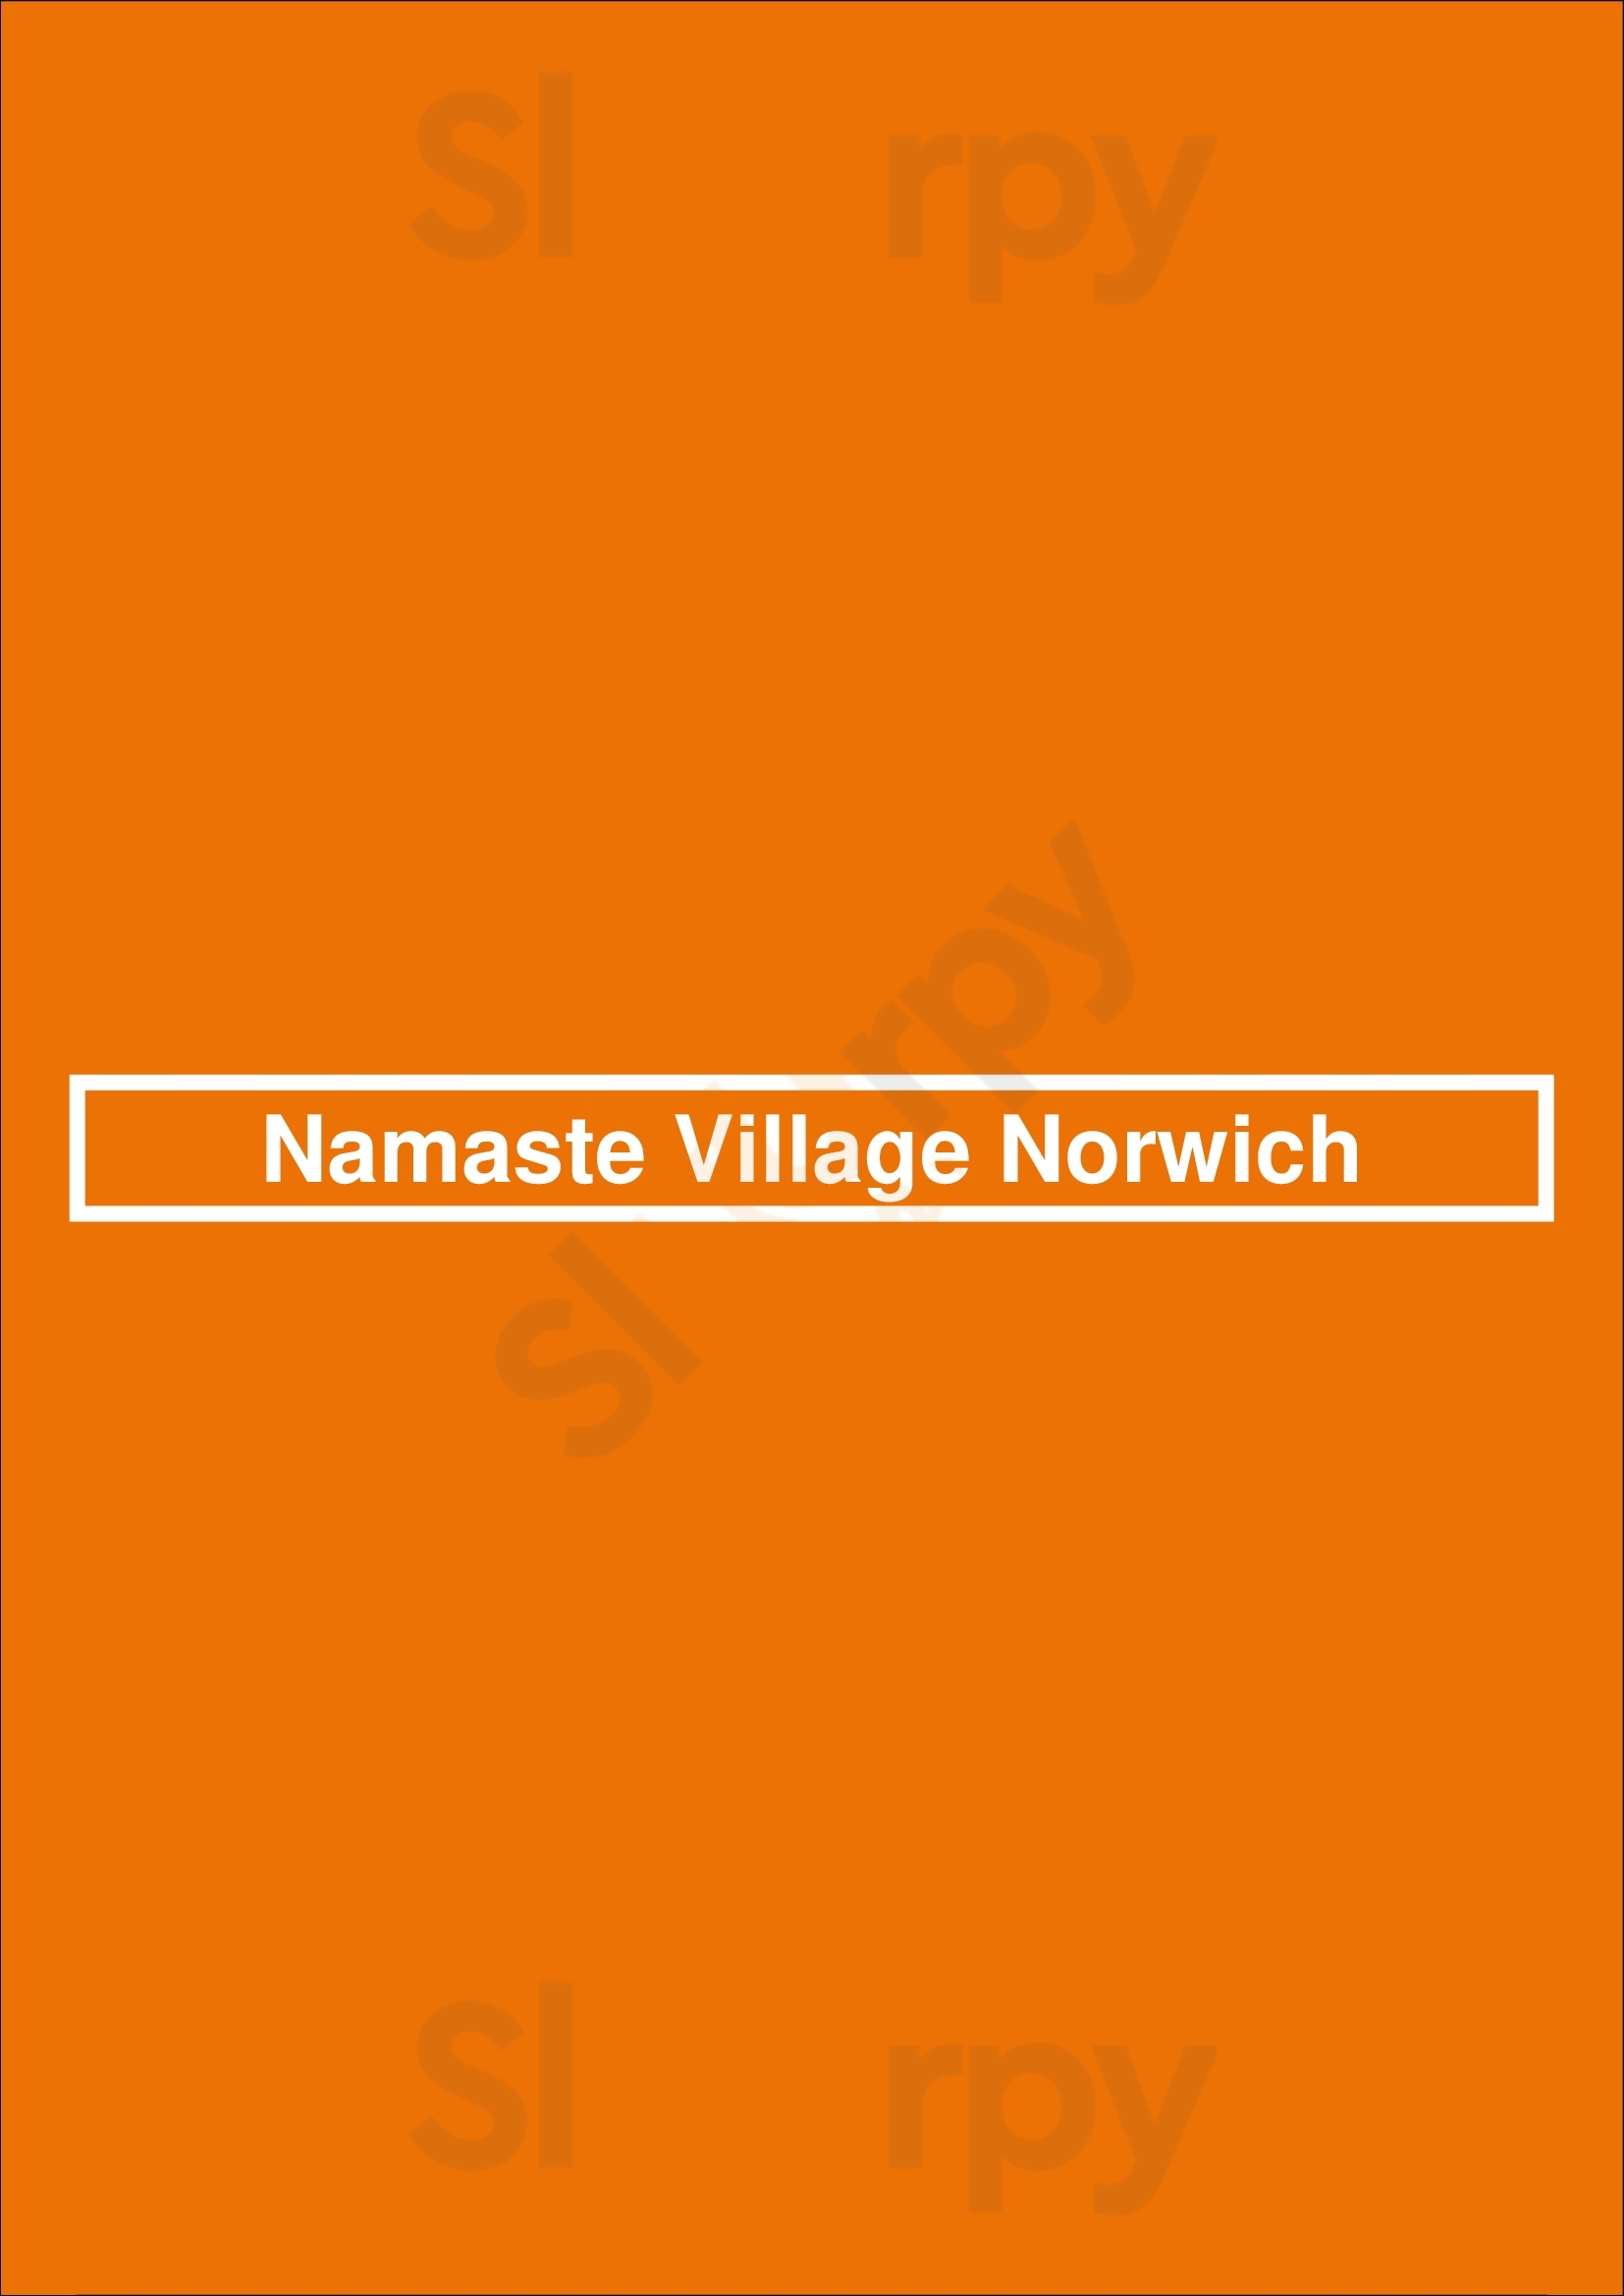 Namaste Village Norwich Norwich Menu - 1